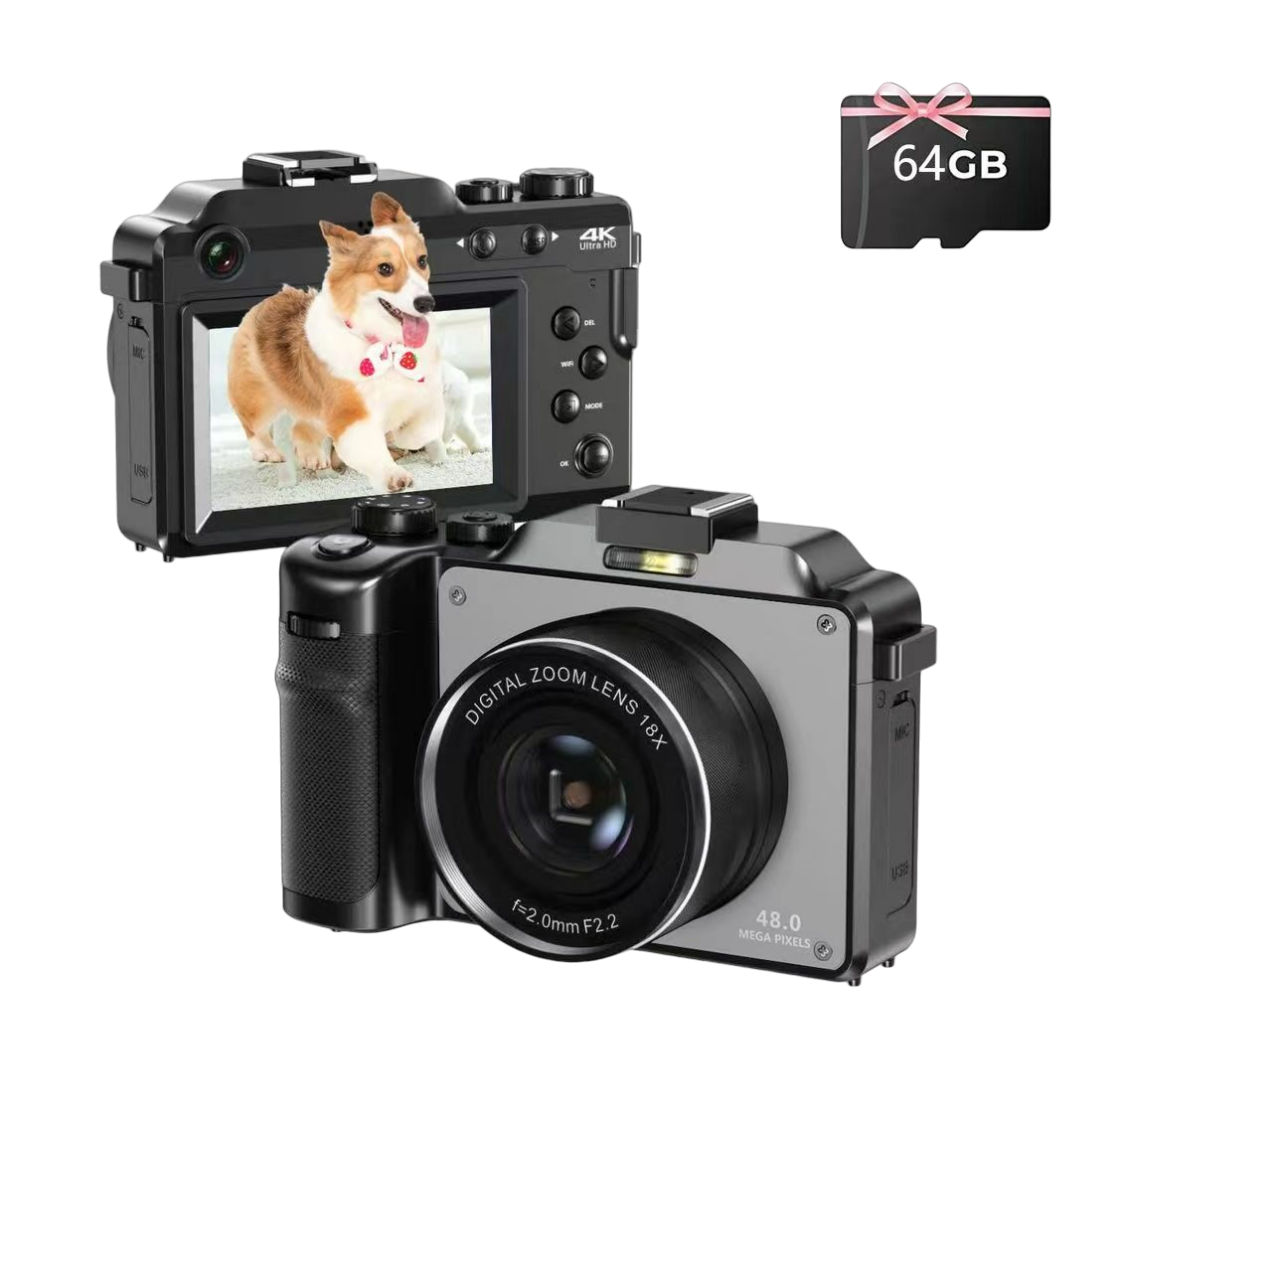 Kamera 18x Grau, Digital HD opt. MP Zoom- LINGDA 48 4K